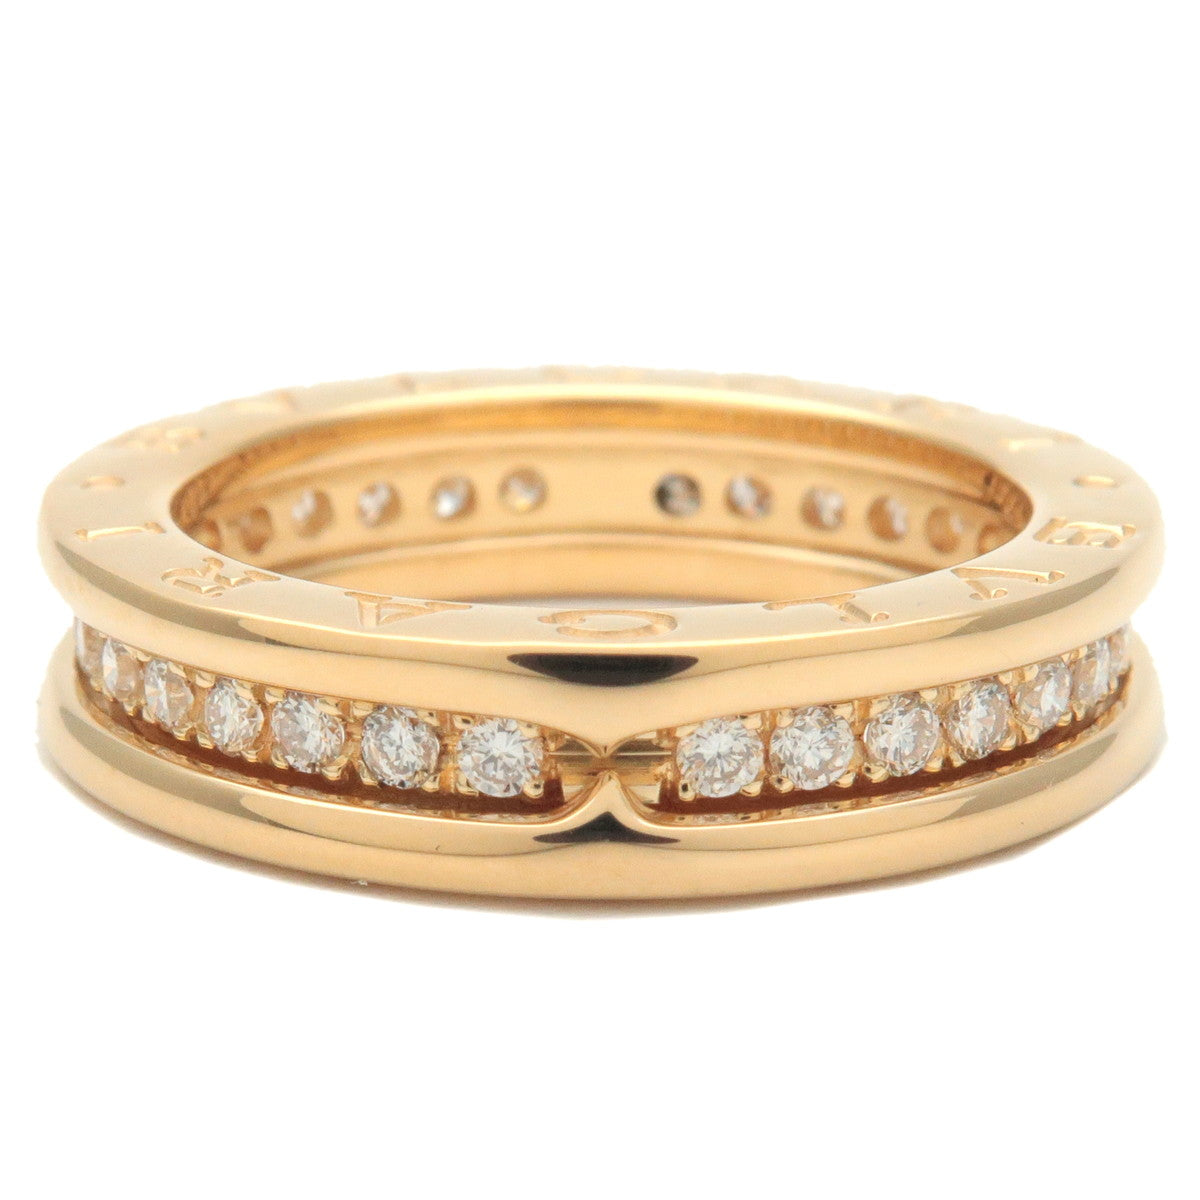 BVLGARI B-zero1 Full Diamond Ring XS K18YG Yellow Gold #51 US5.5